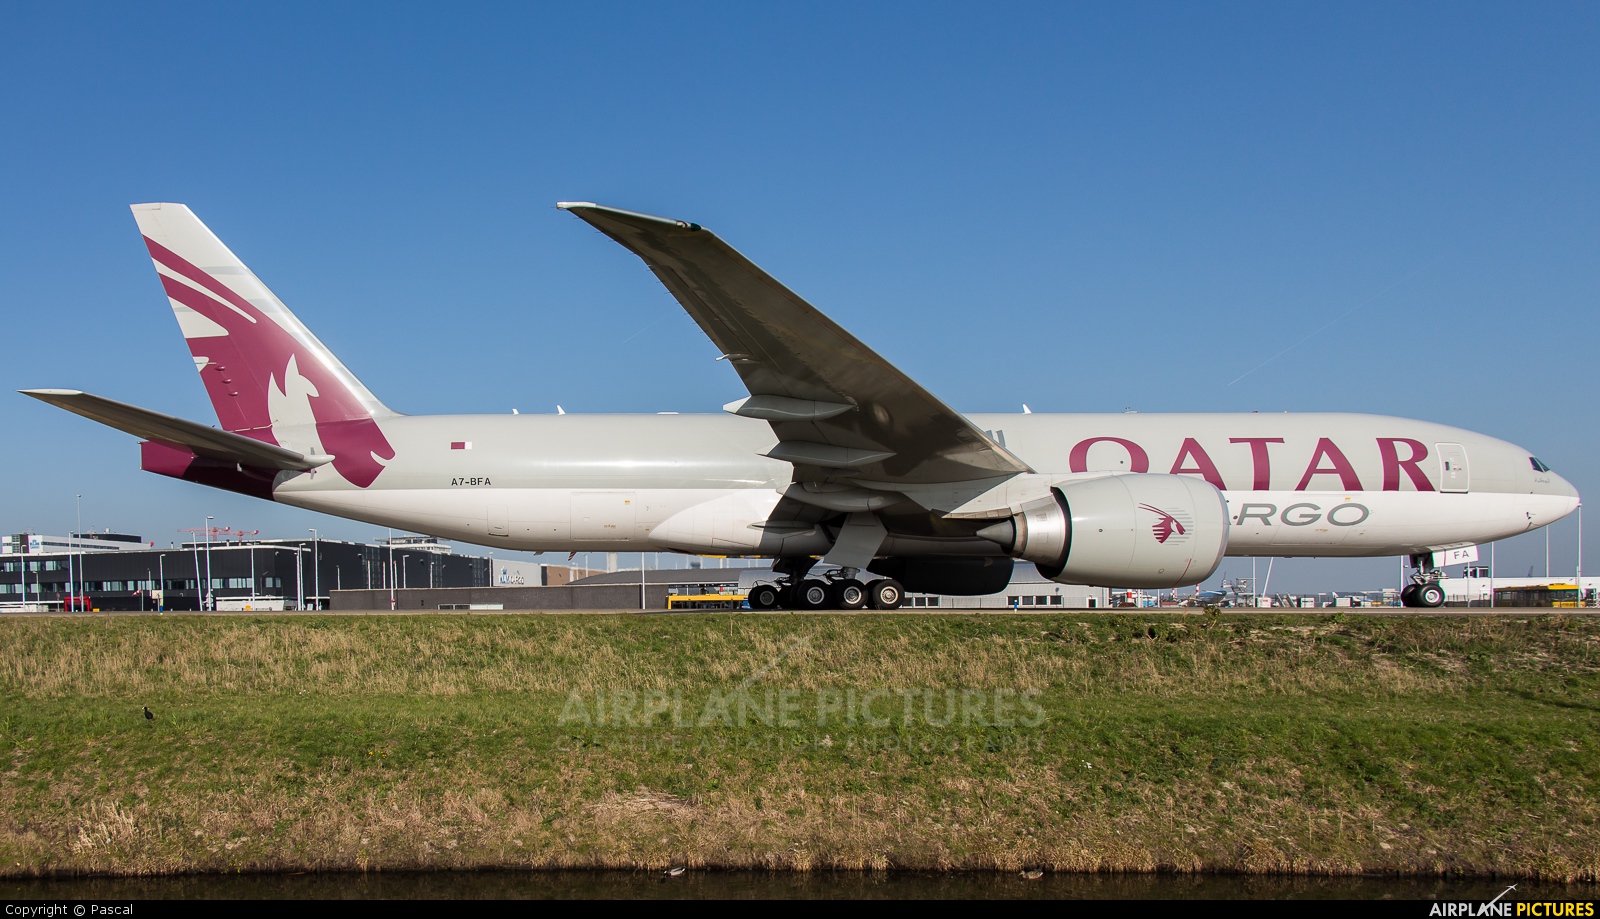 Qatar Airways Cargo A7-BFA aircraft at Amsterdam - Schiphol